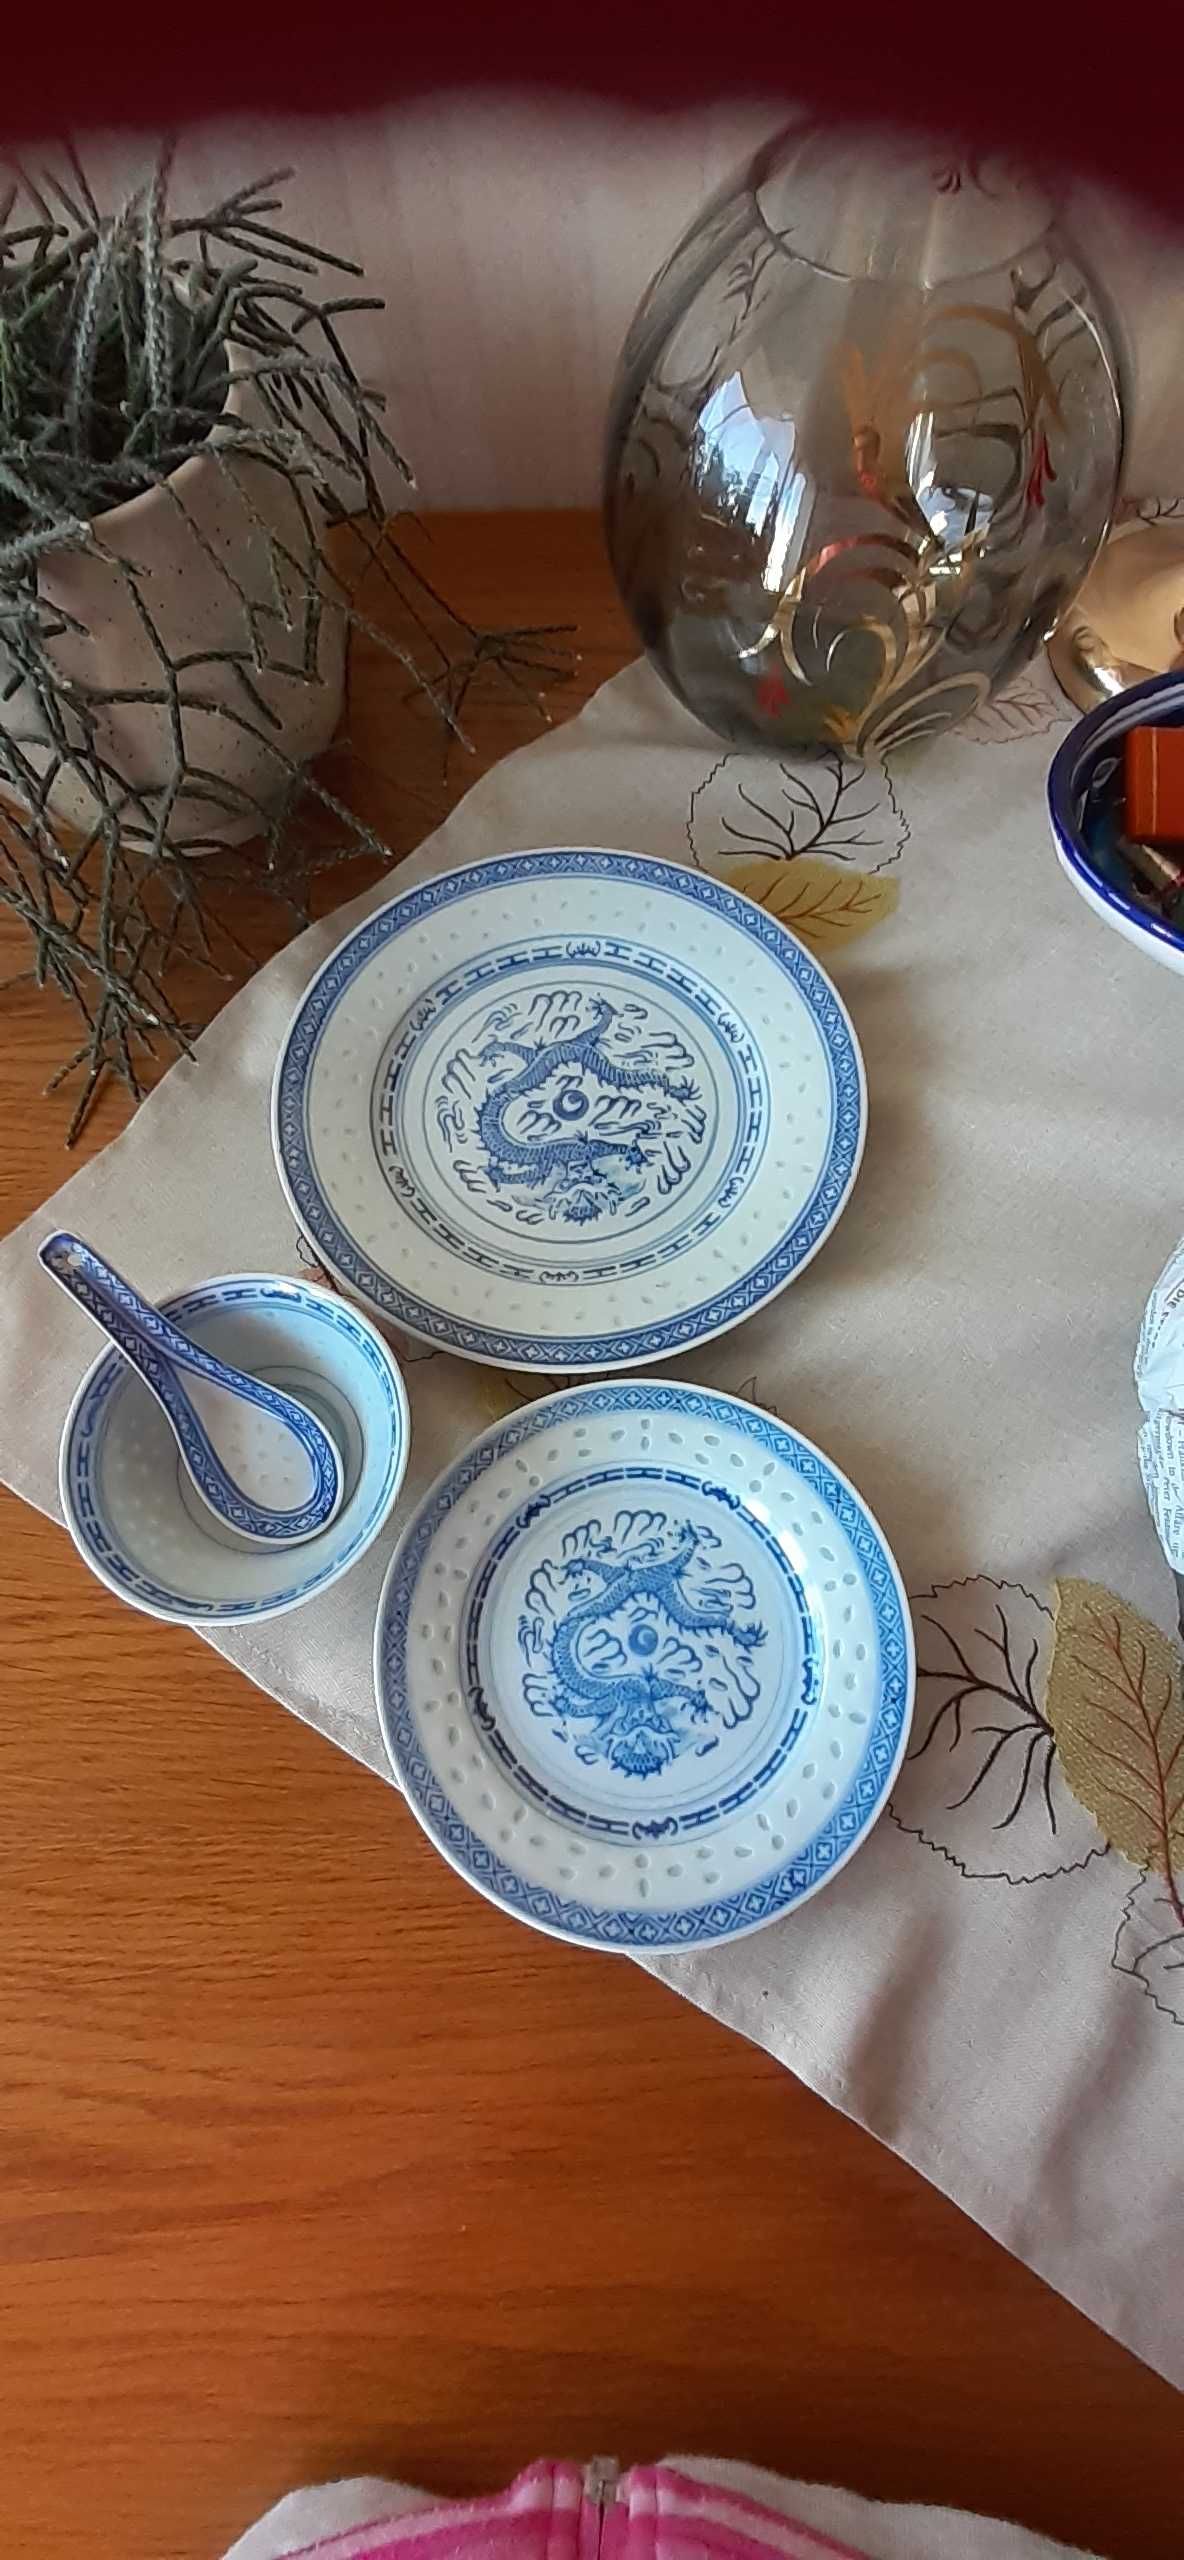 Chinska porcelana kolekcja